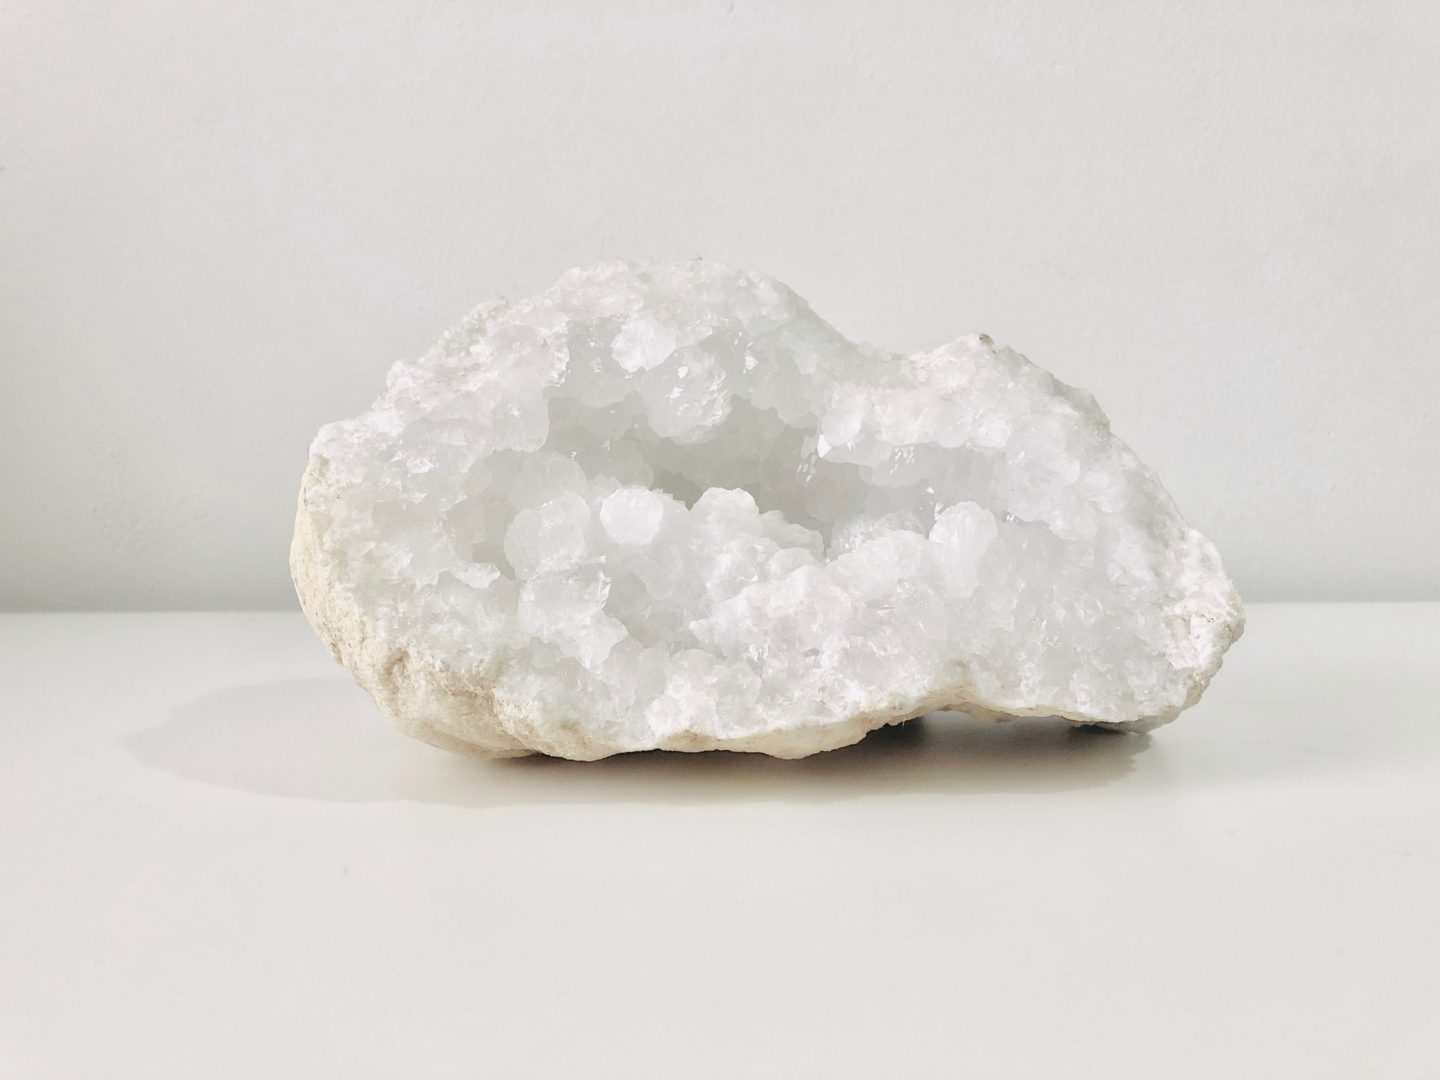 clear quartz rock against white background